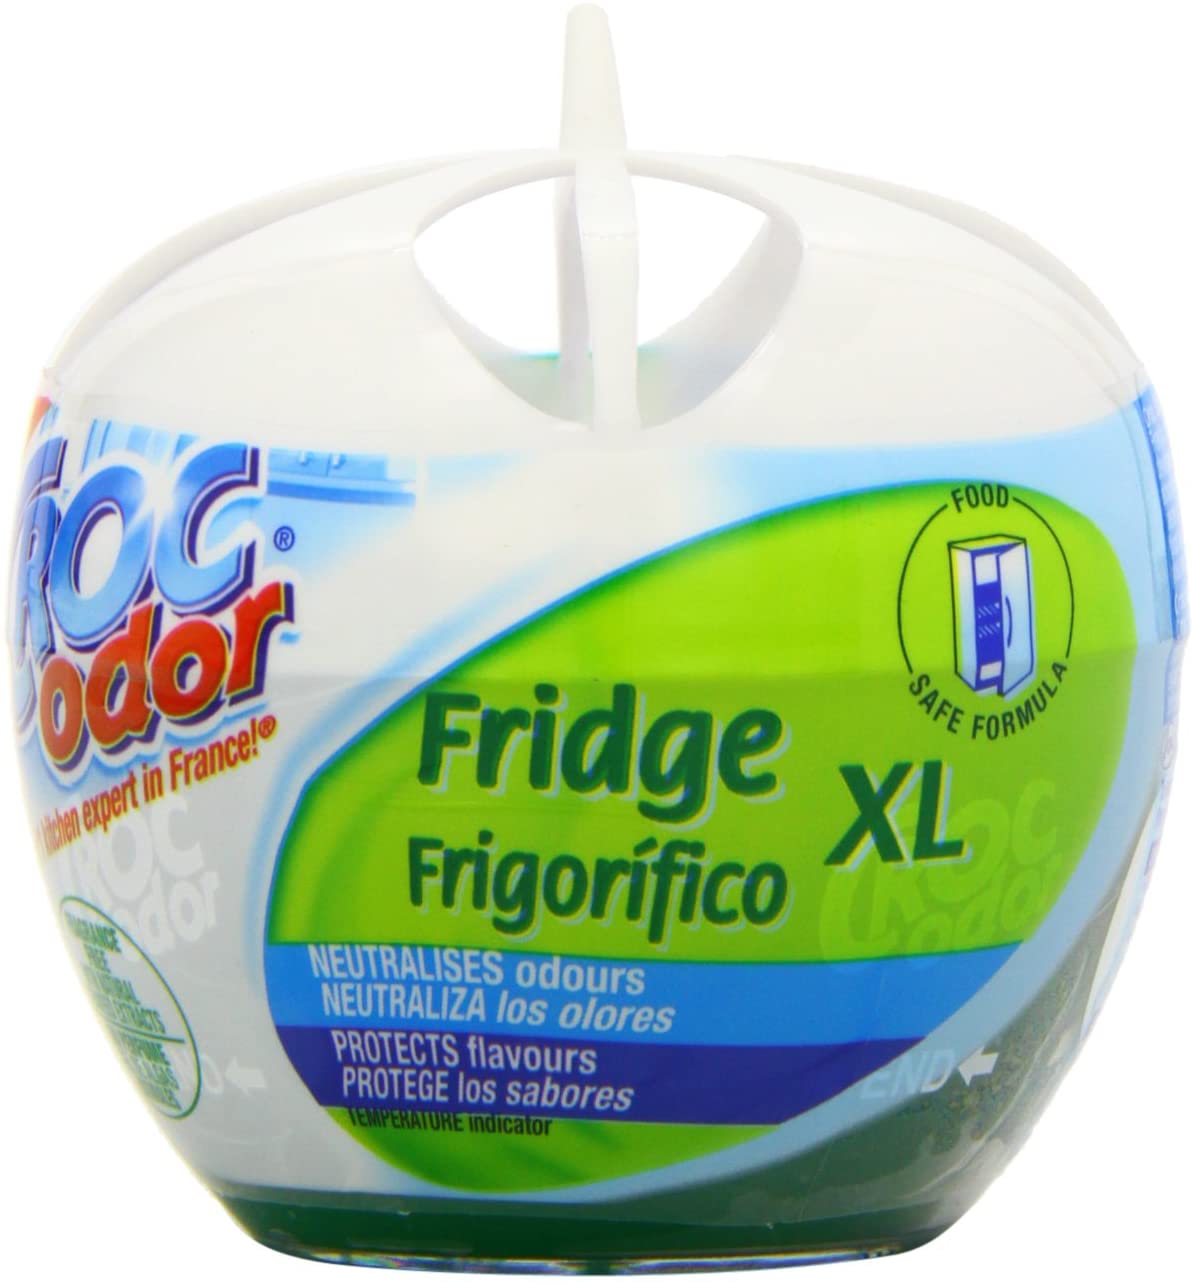 Croc-Odor-xl-Fridge-Deodoriser-140g